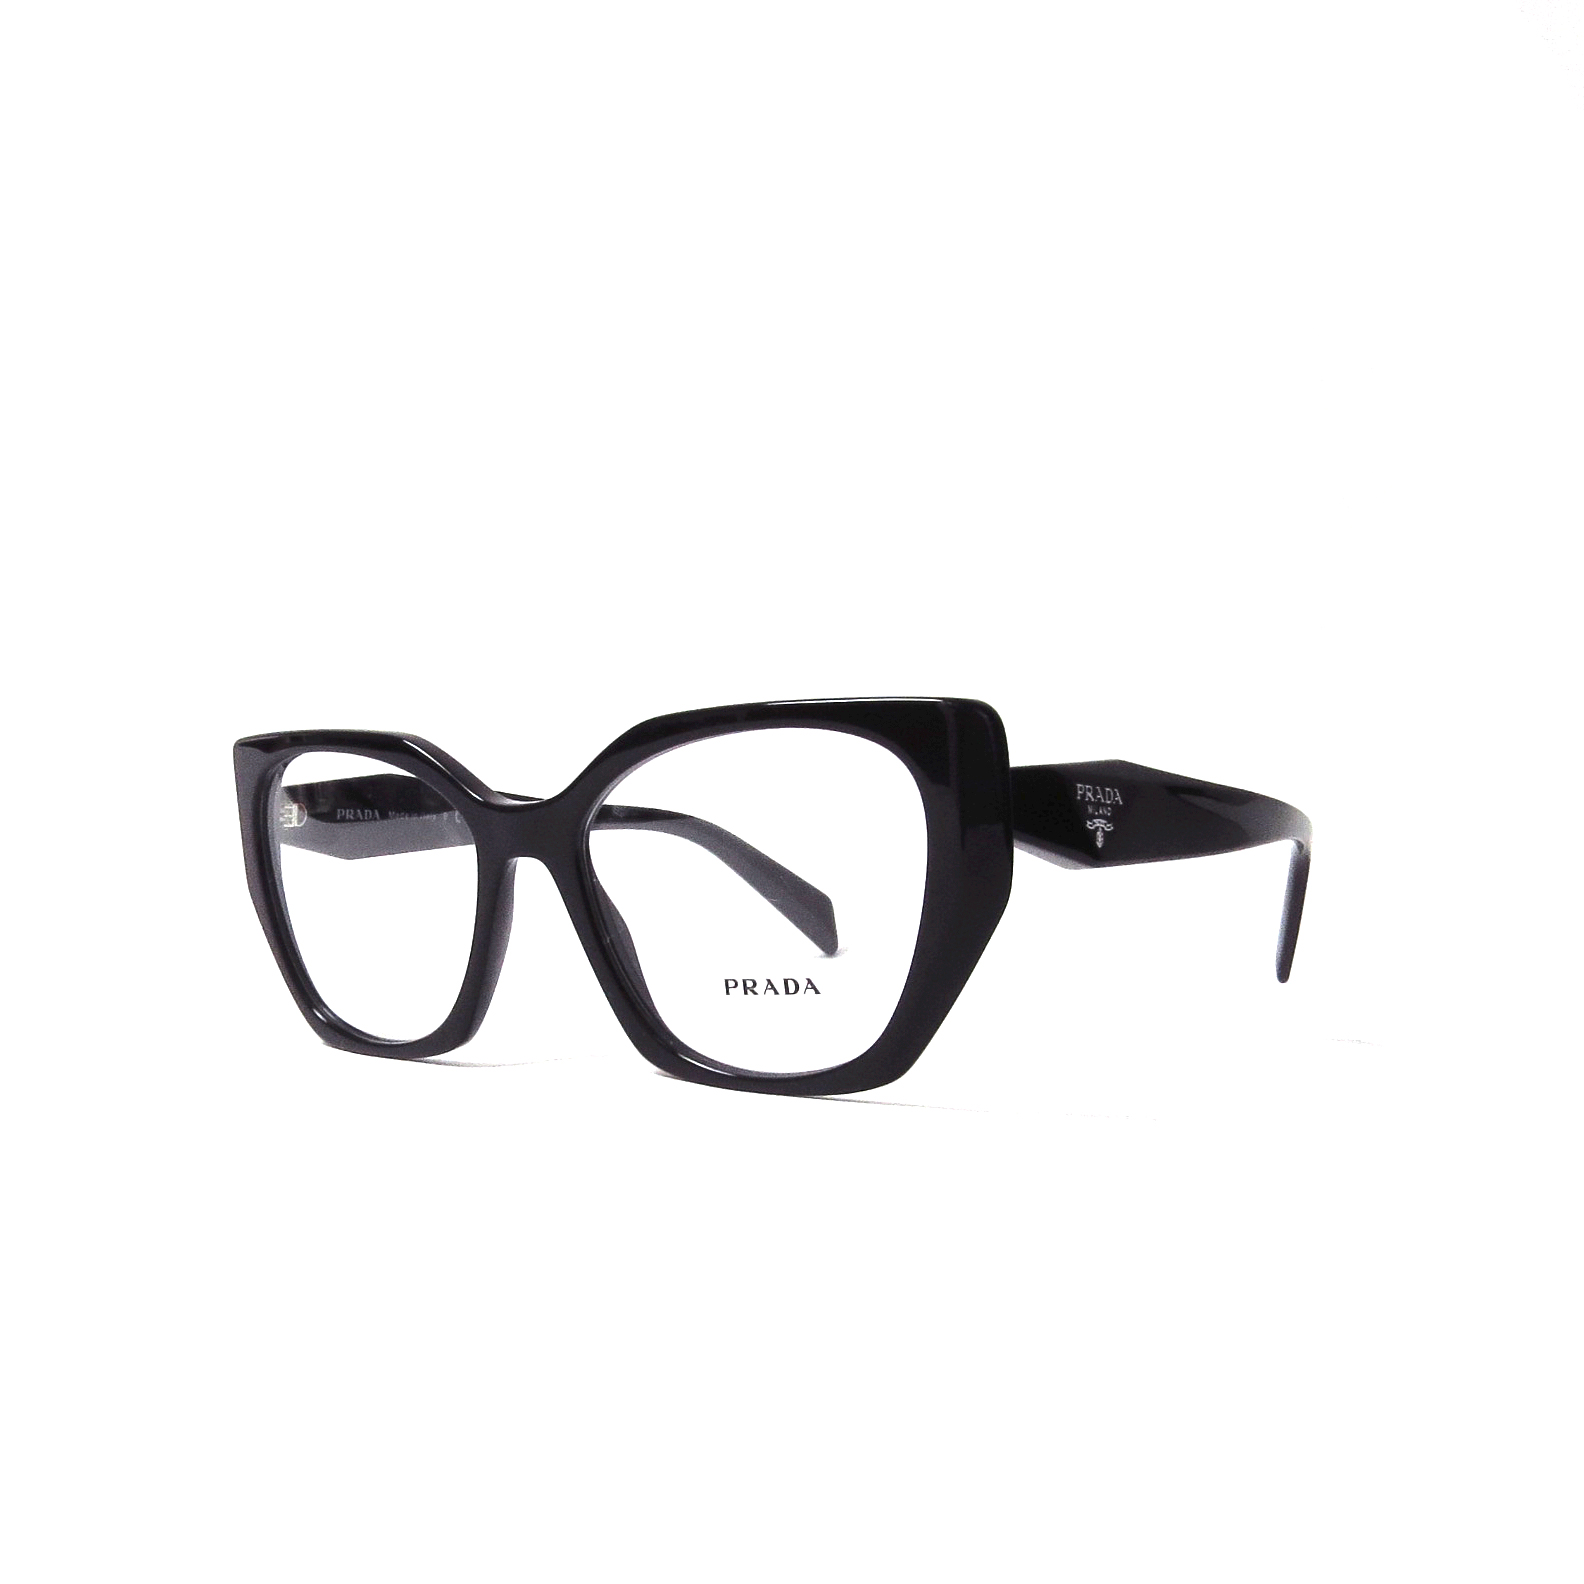 las gafas | PRADA - 18 WV - Óptica gafas